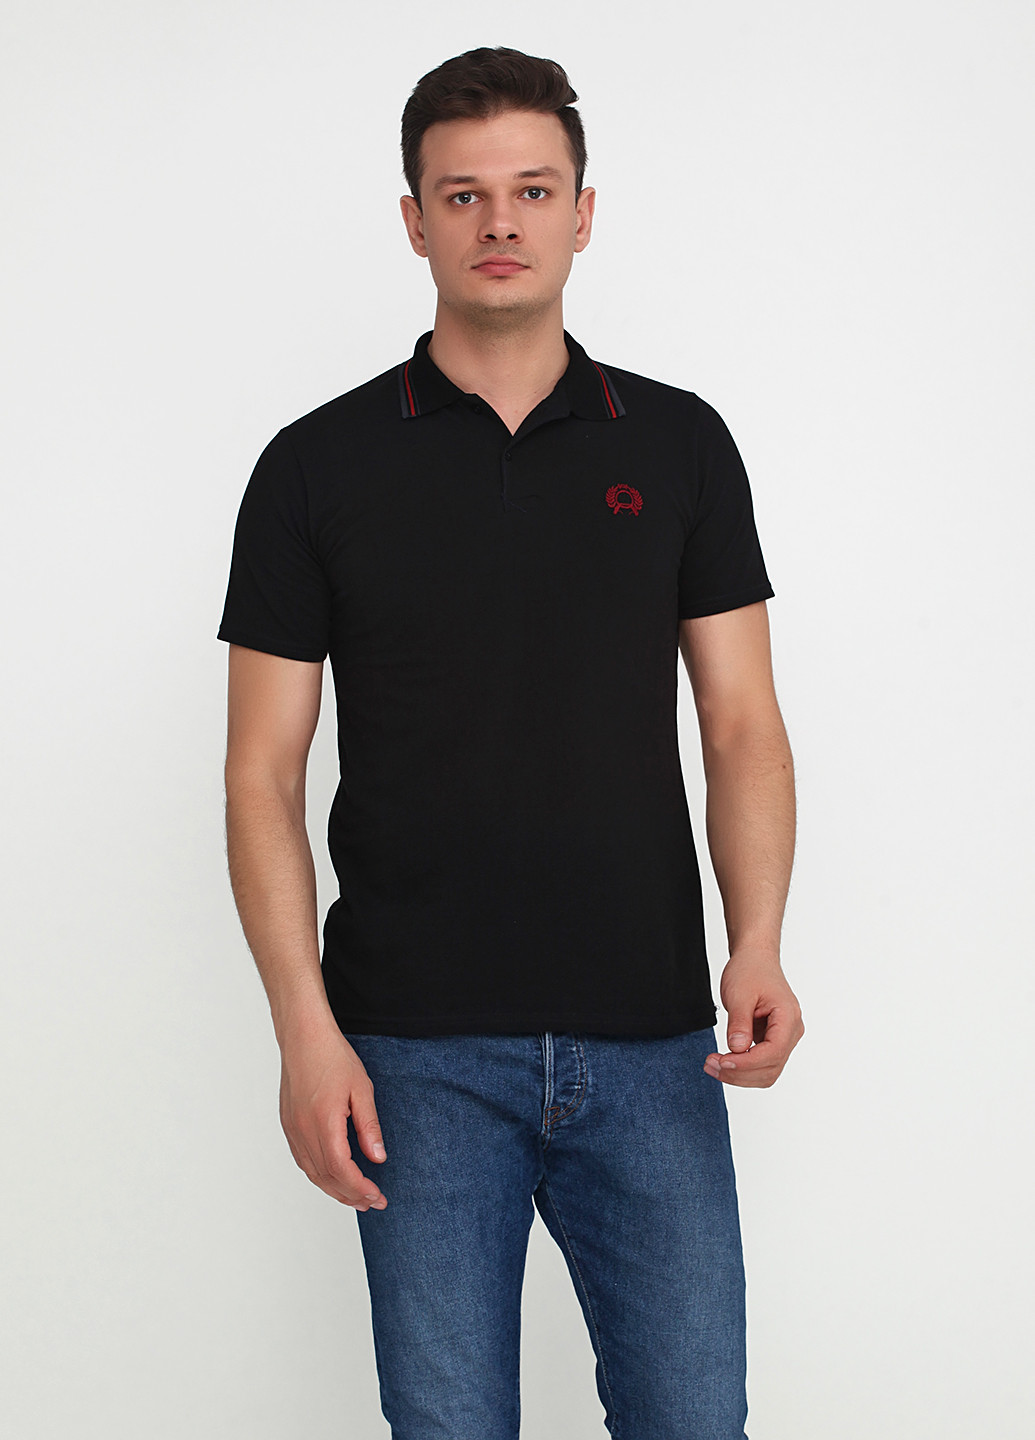 Черная футболка-поло для мужчин West Wint с логотипом